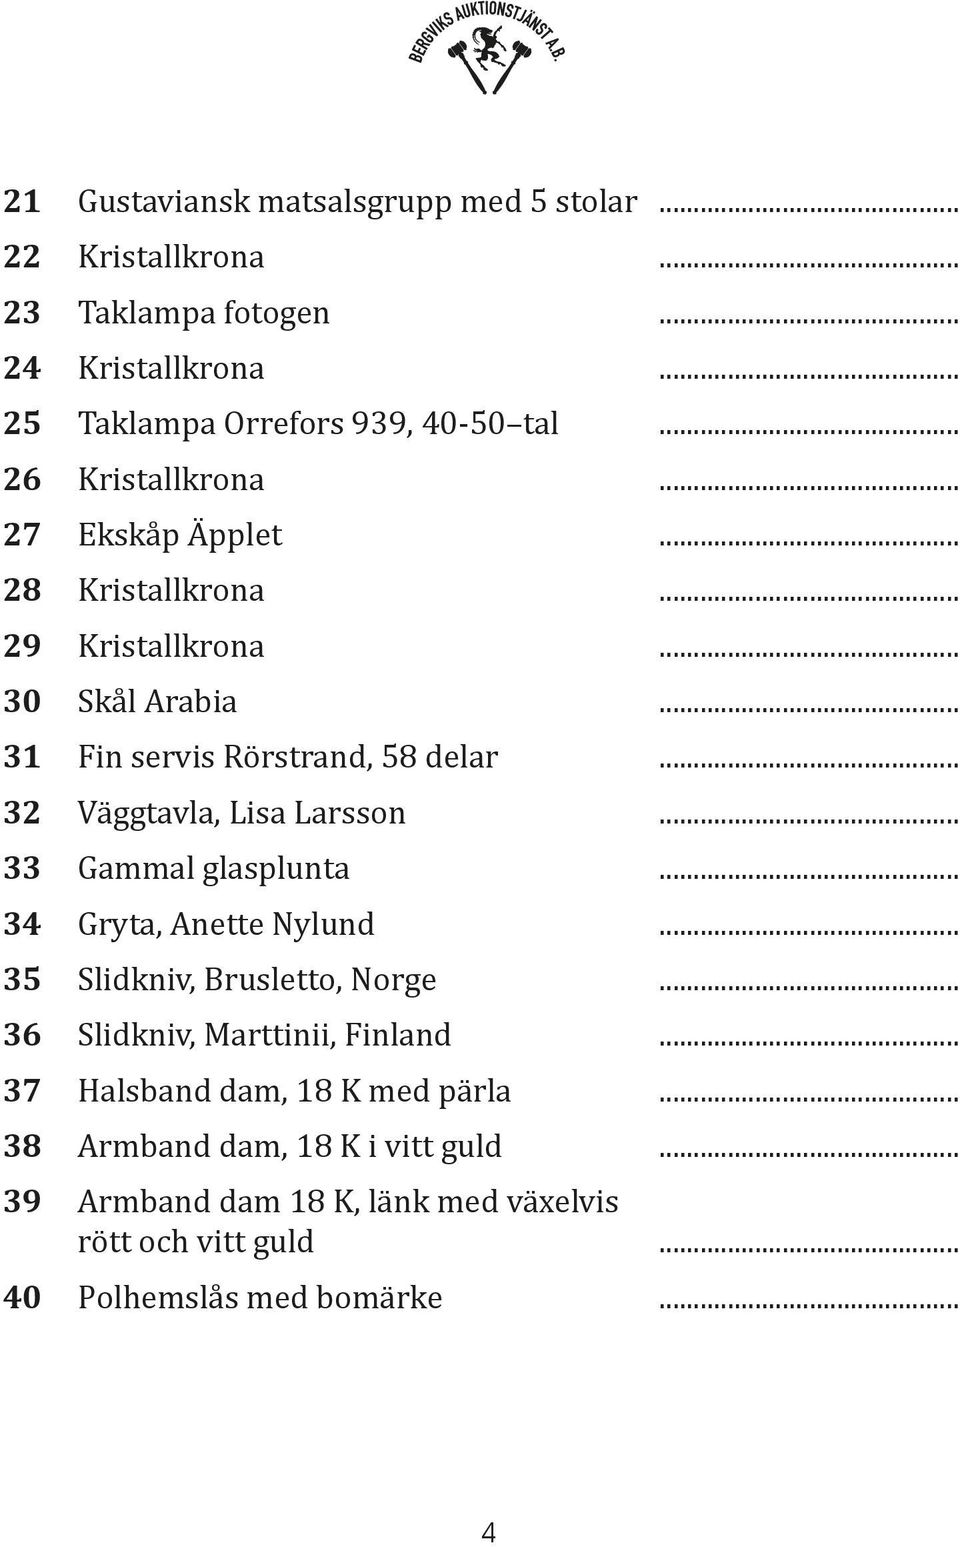 .. 32 Väggtavla, Lisa Larsson... 33 Gammal glasplunta... 34 Gryta, Anette Nylund... 35 Slidkniv, Brusletto, Norge... 36 Slidkniv, Marttinii, Finland.